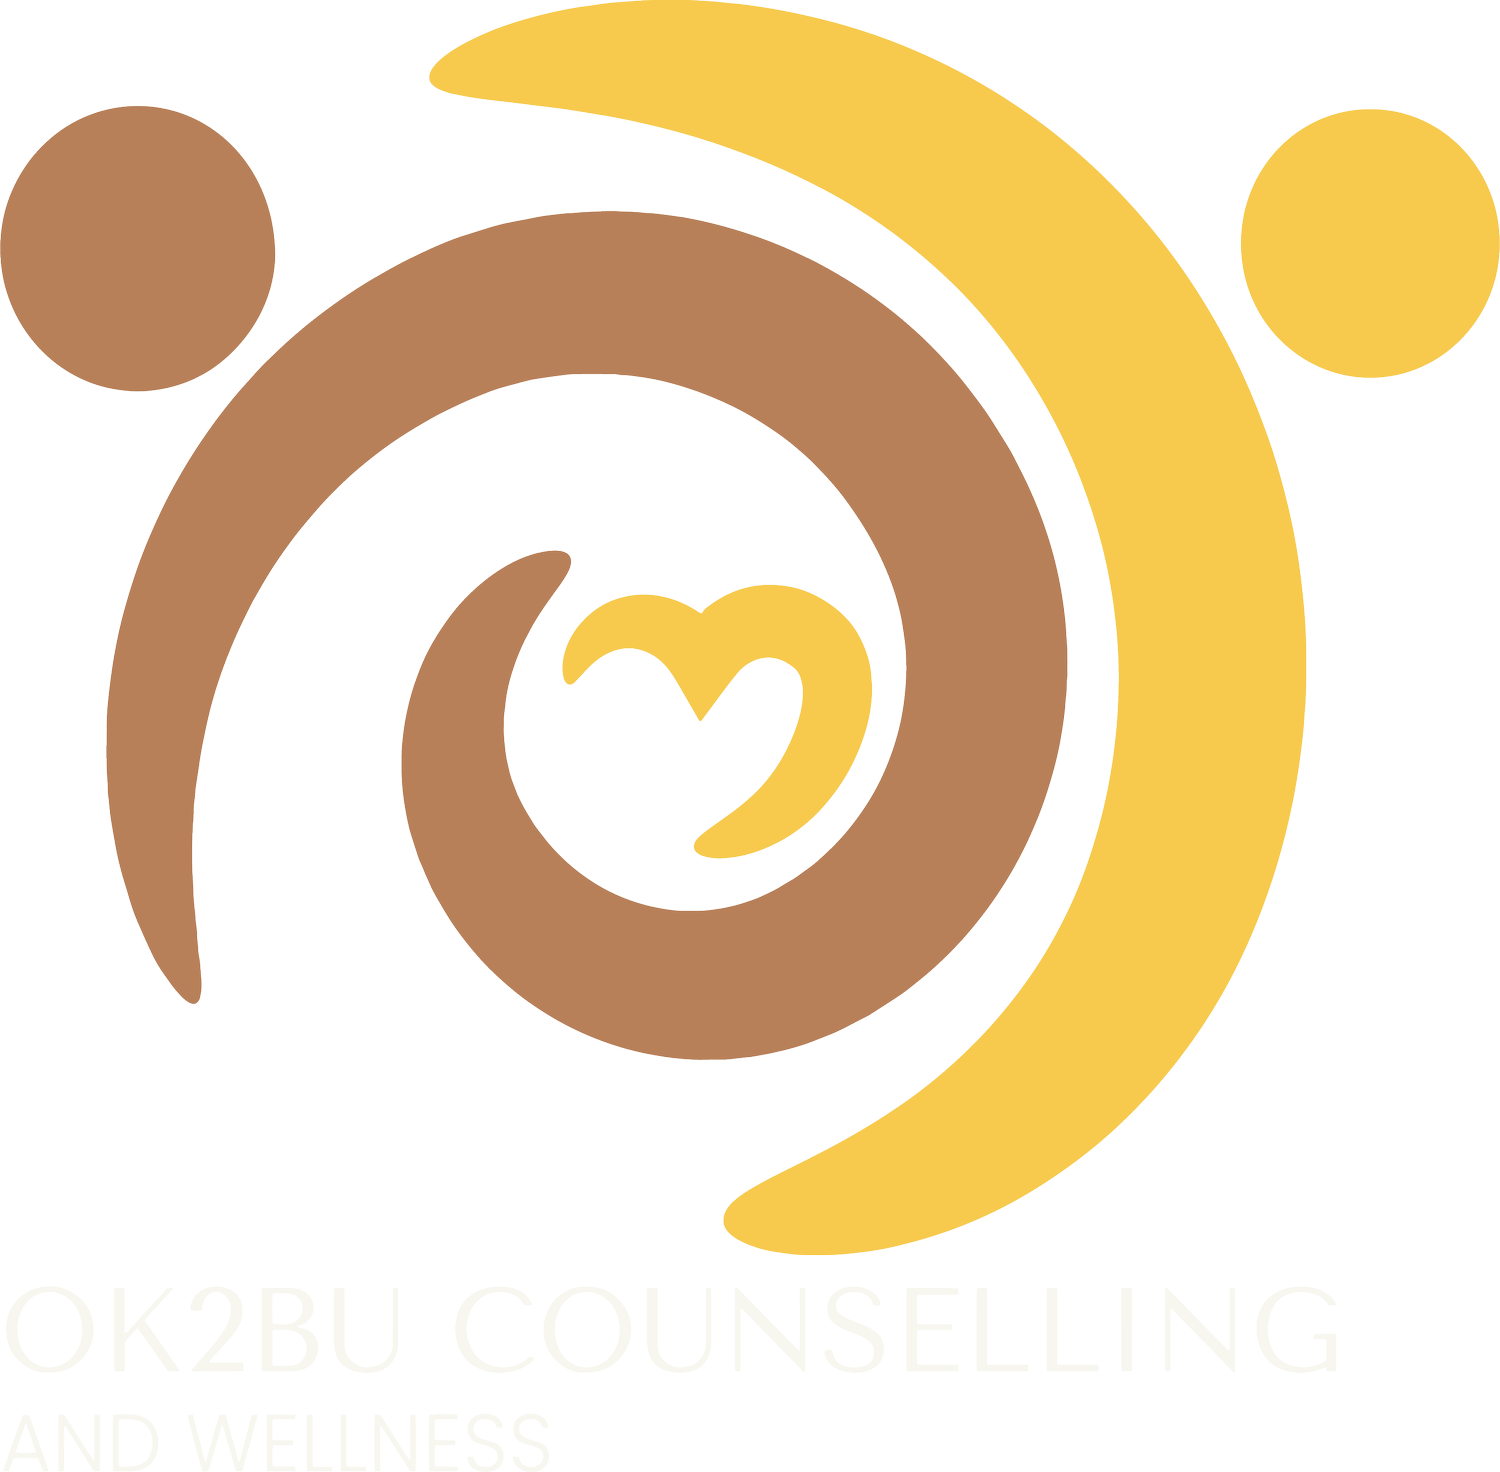 Ok2BU Counselling And Wellness